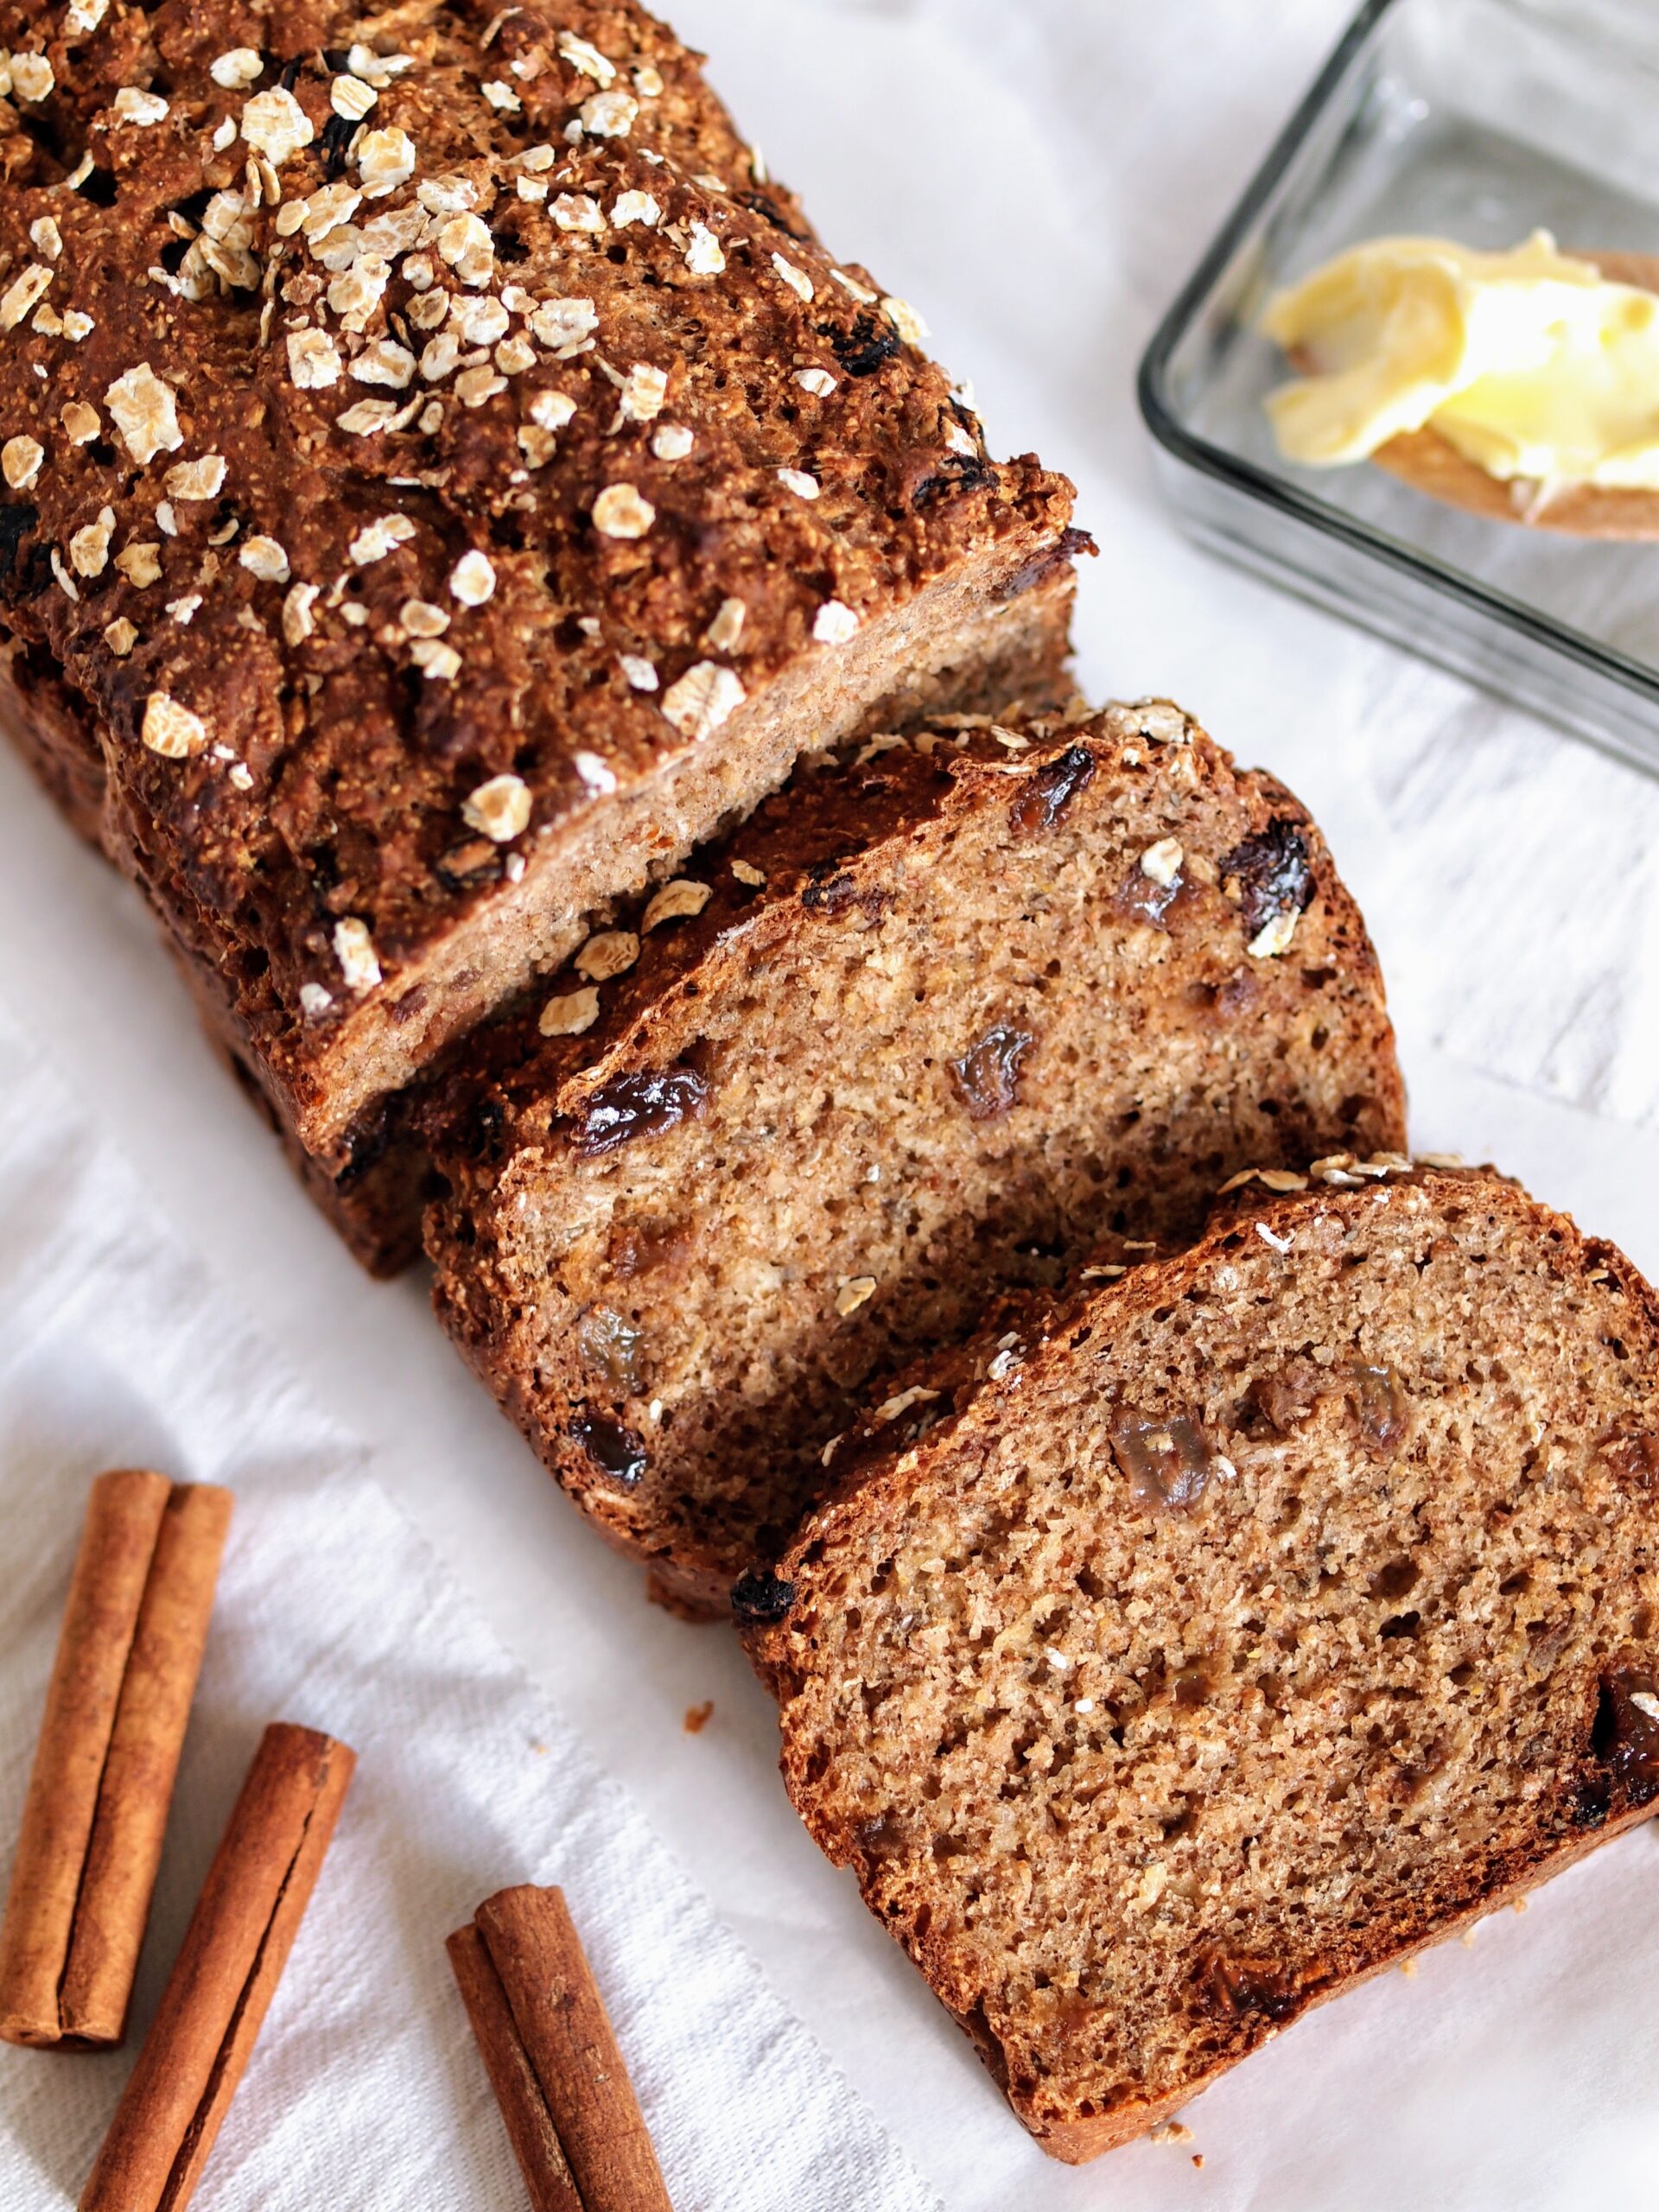 Healthy Vegan Cinnamon Raisin Bread – No Yeast or Kneading!